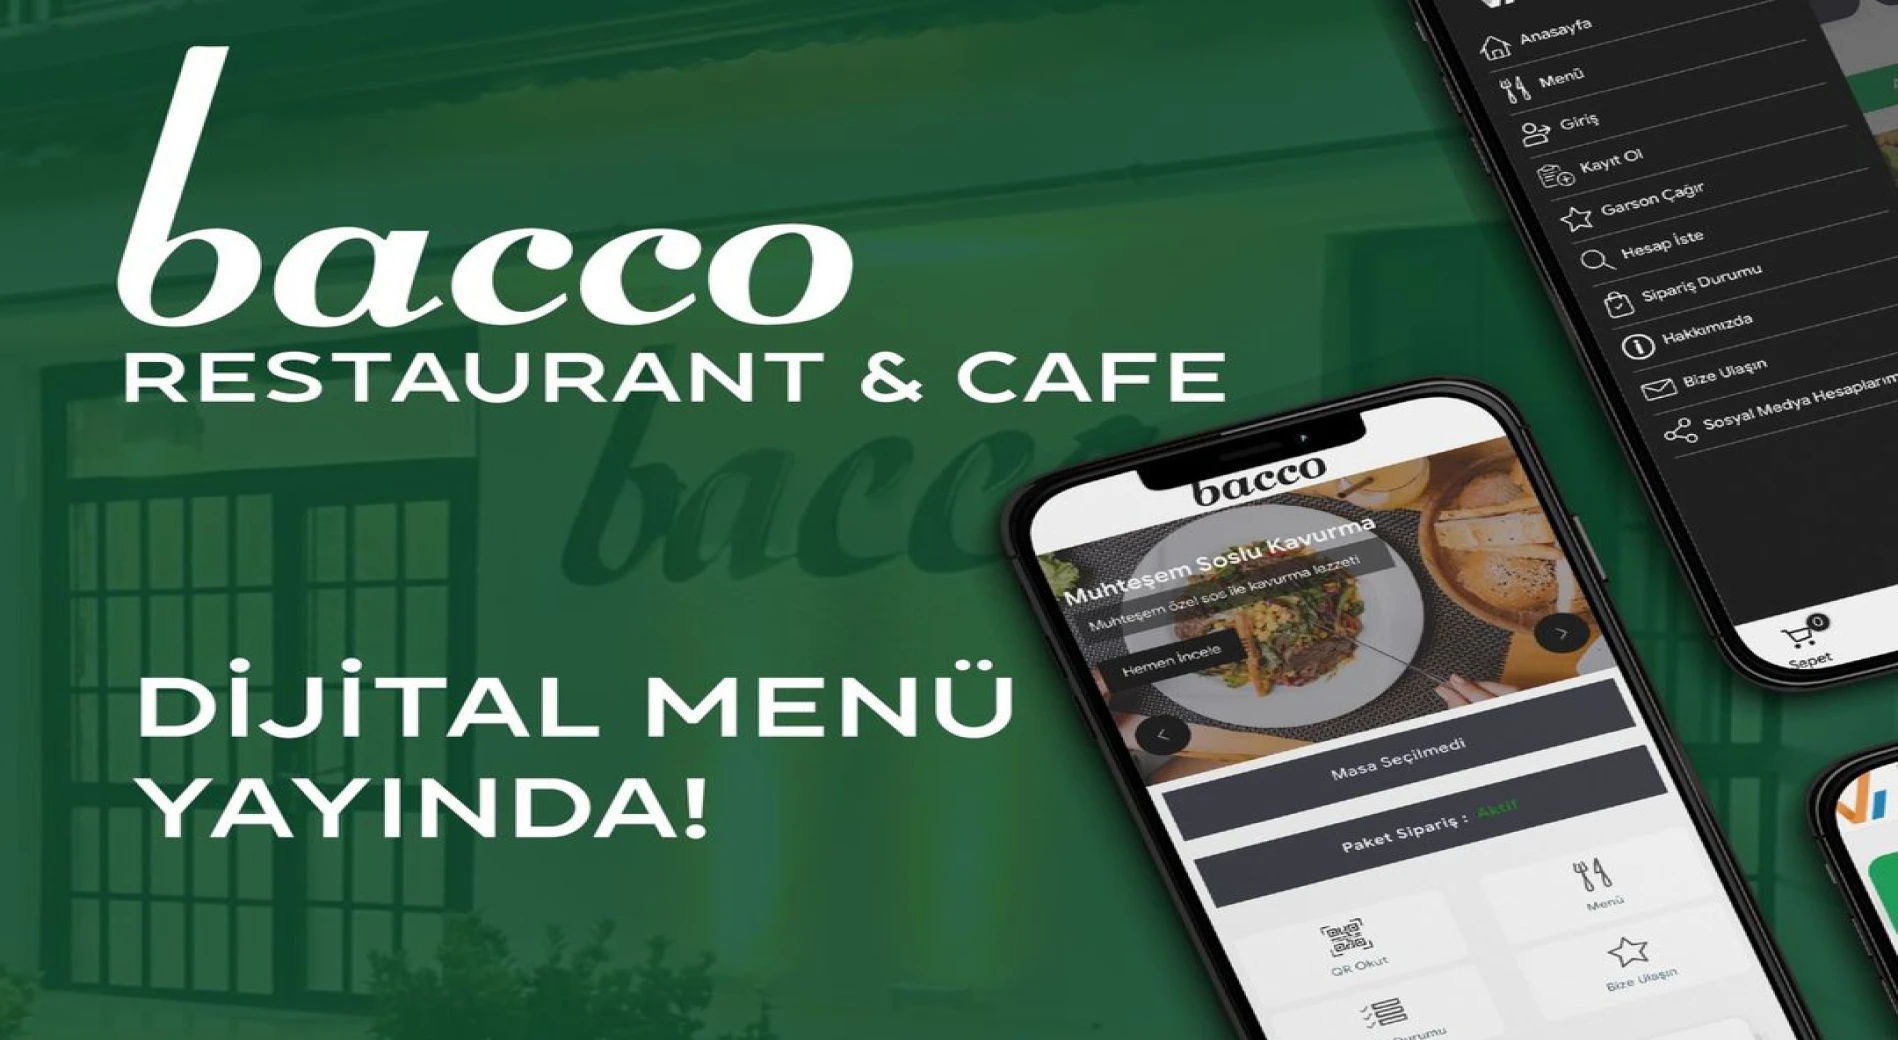 Bacco Cafe & Bistro - Restaurant